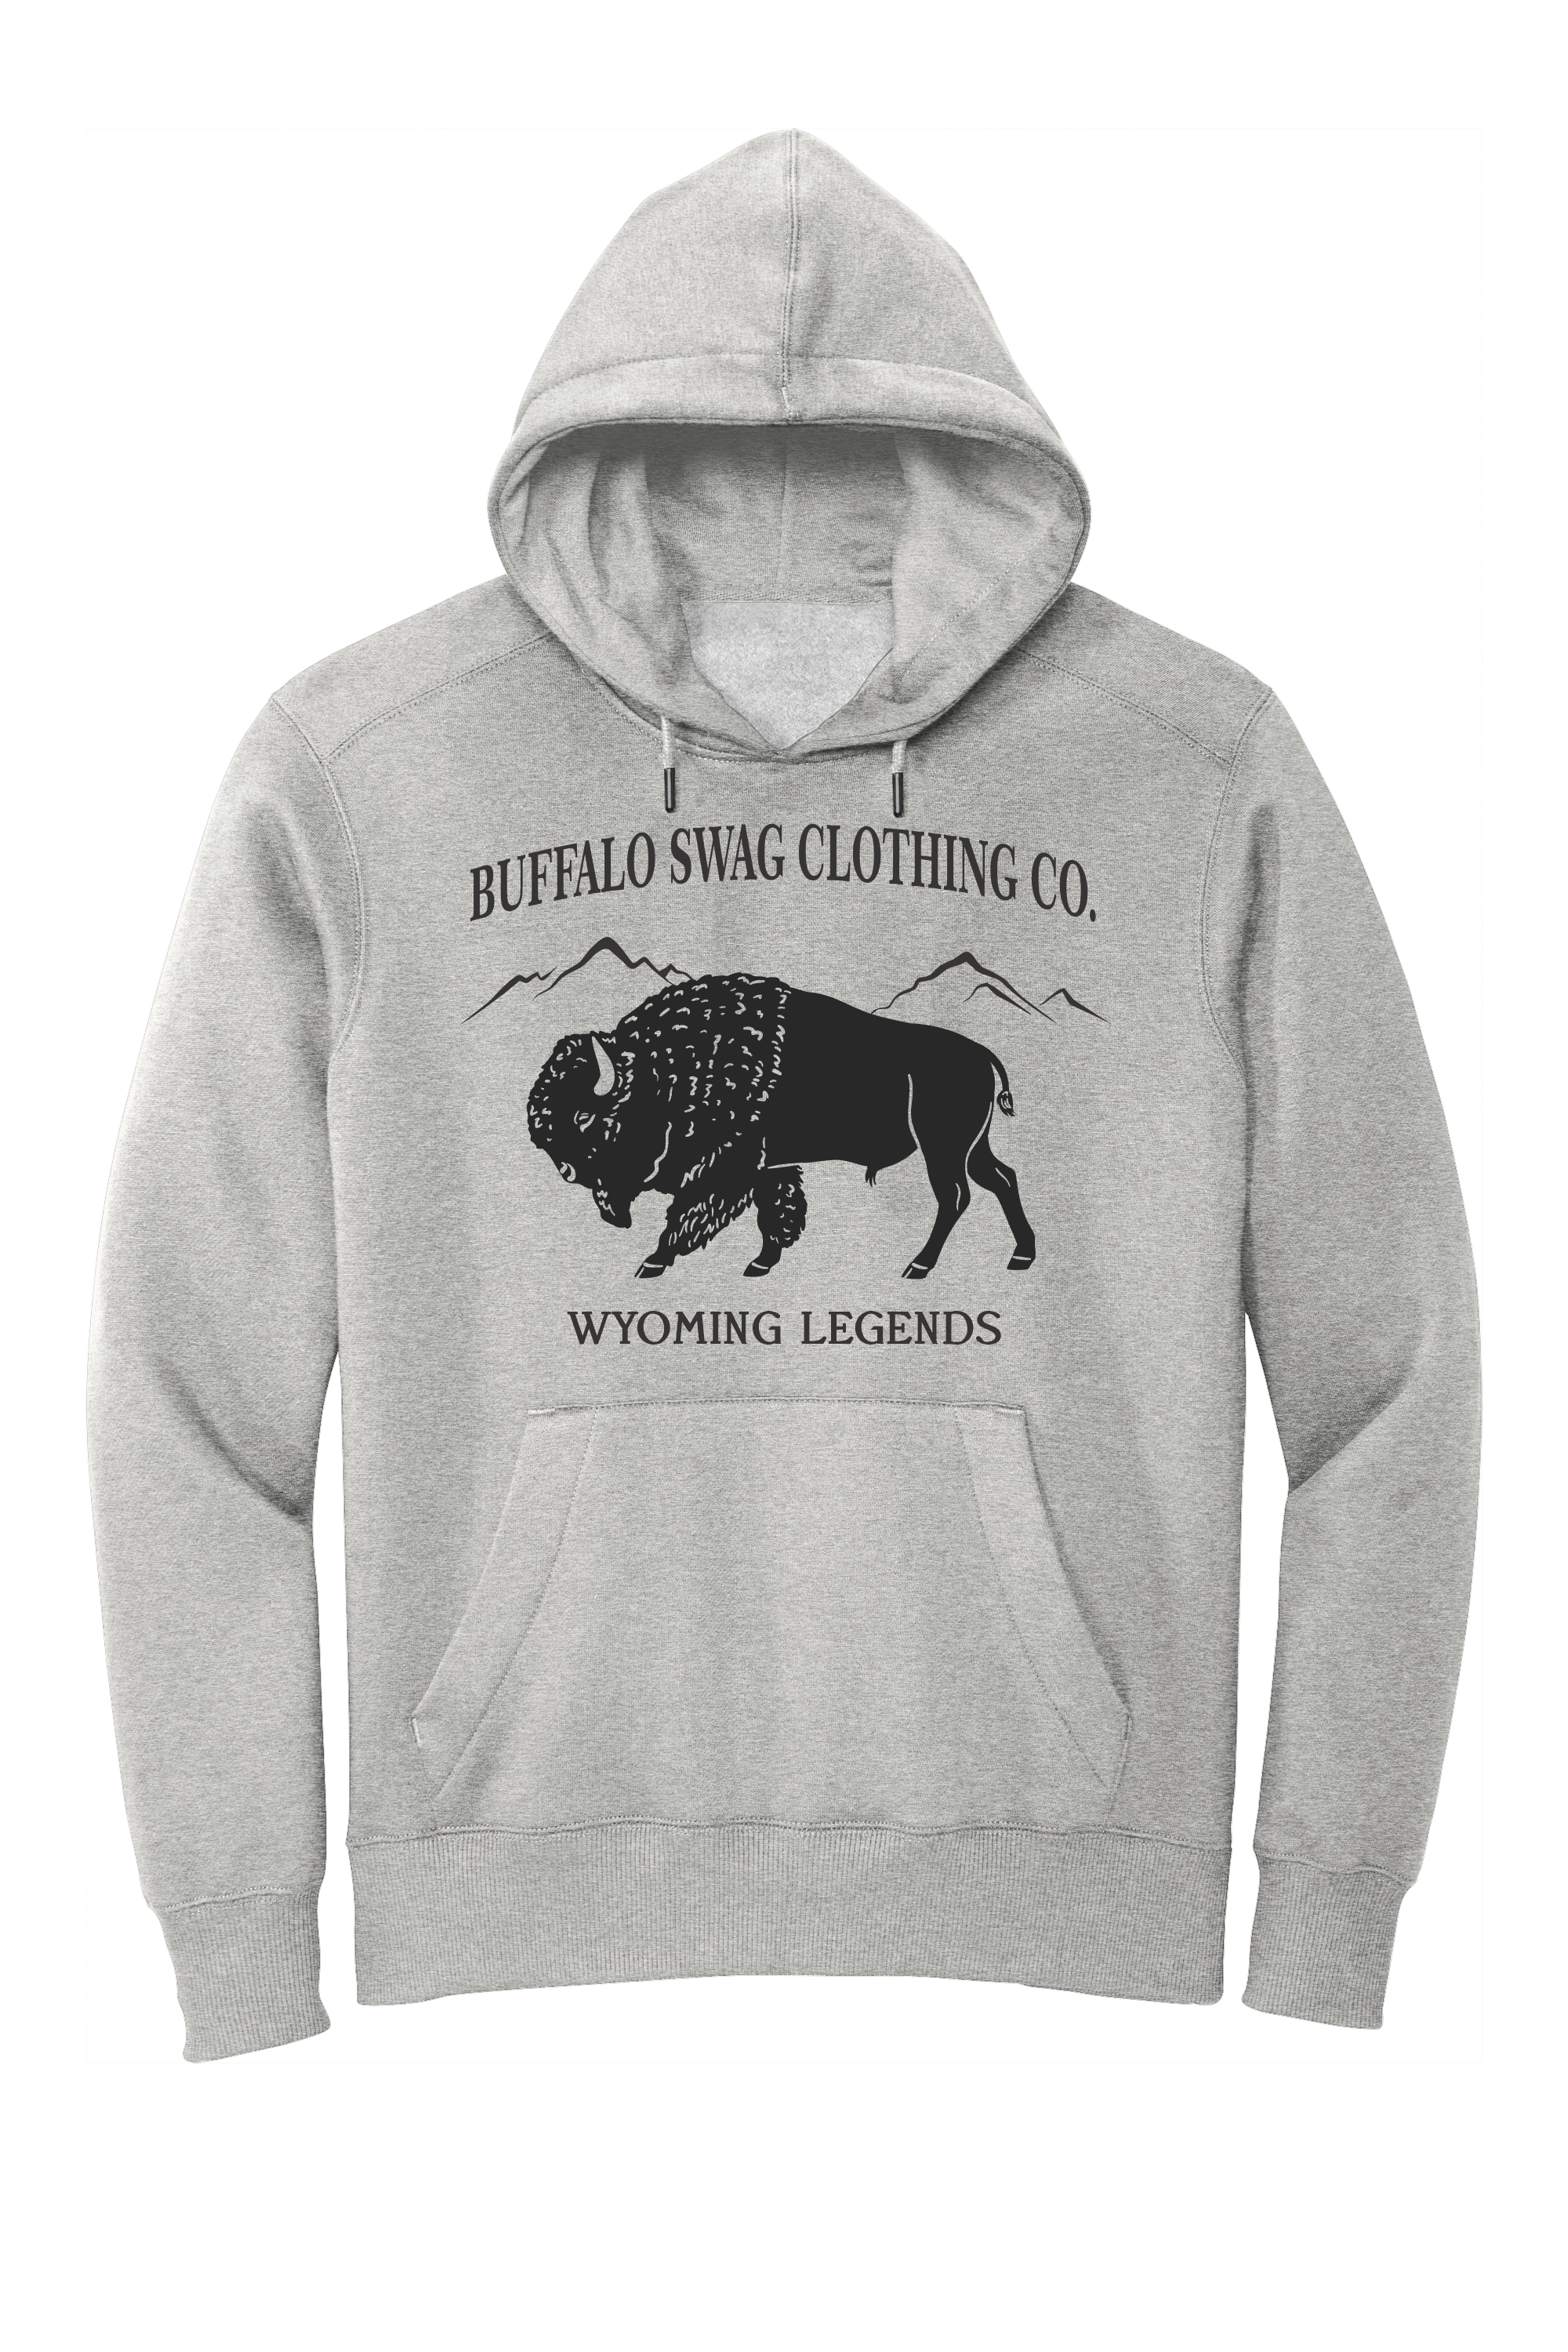 Buffalo Swag Clothing Co. Hoodie